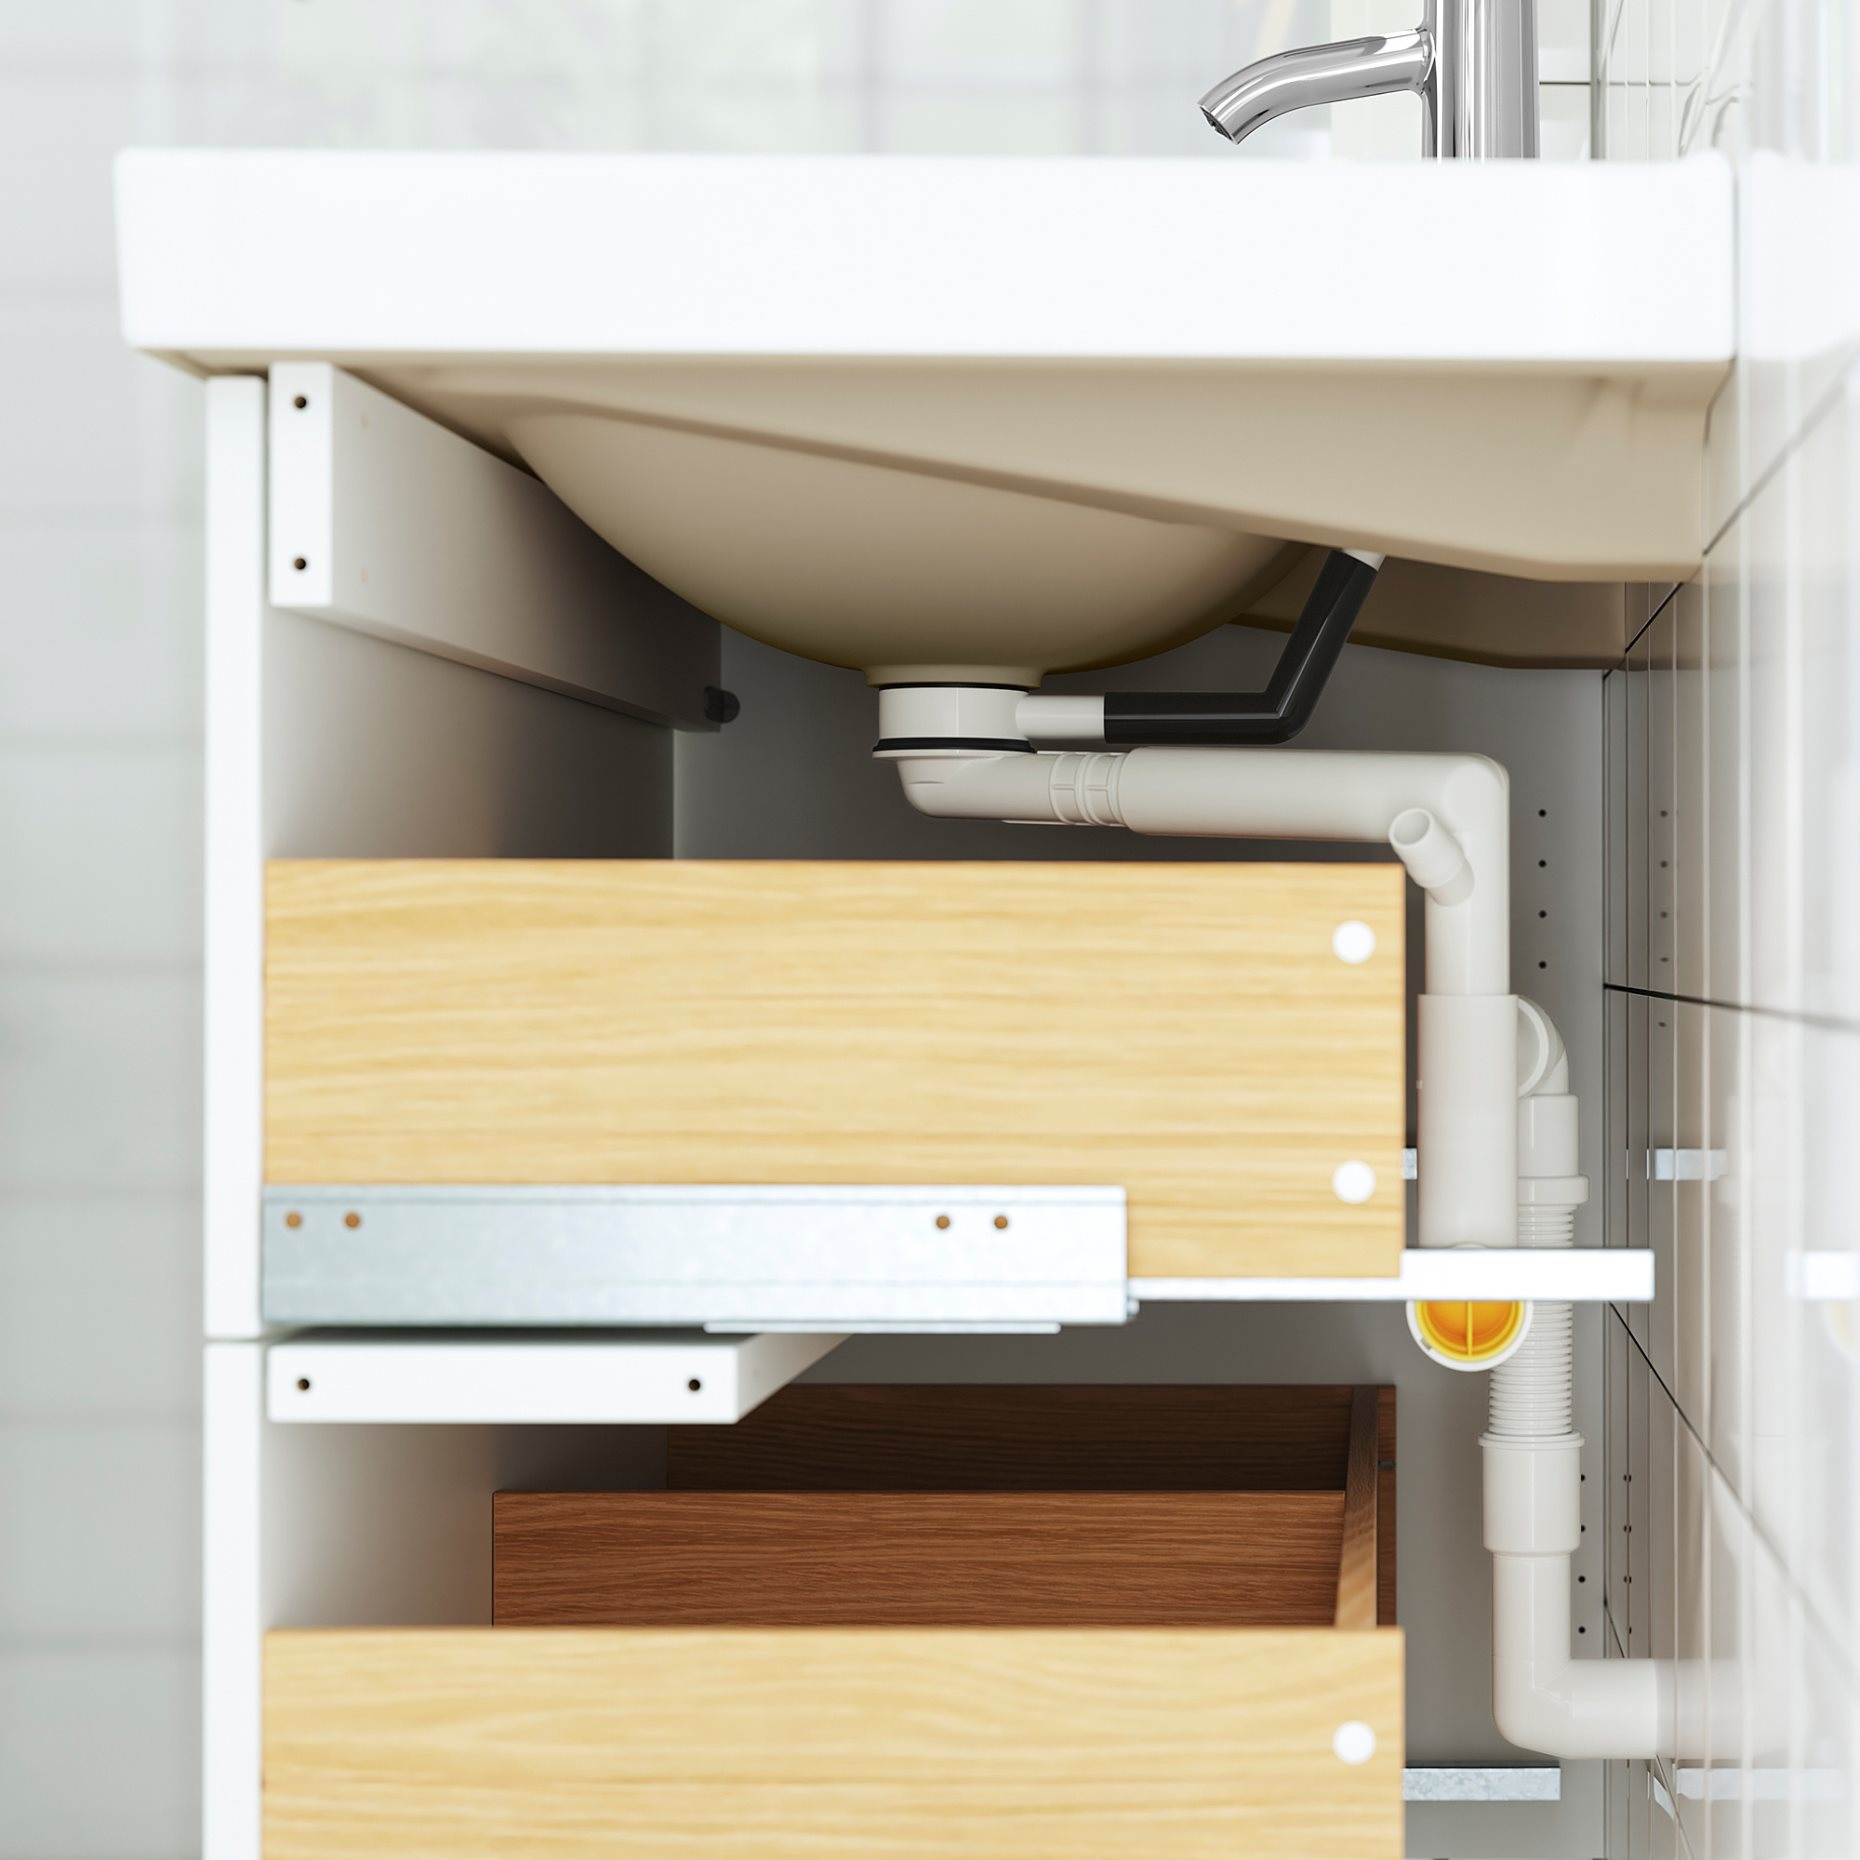 HAVBACK/ORRSJON, wash-stand with drawers/wash-basin/tap, 82x49x69 cm, 995.210.96